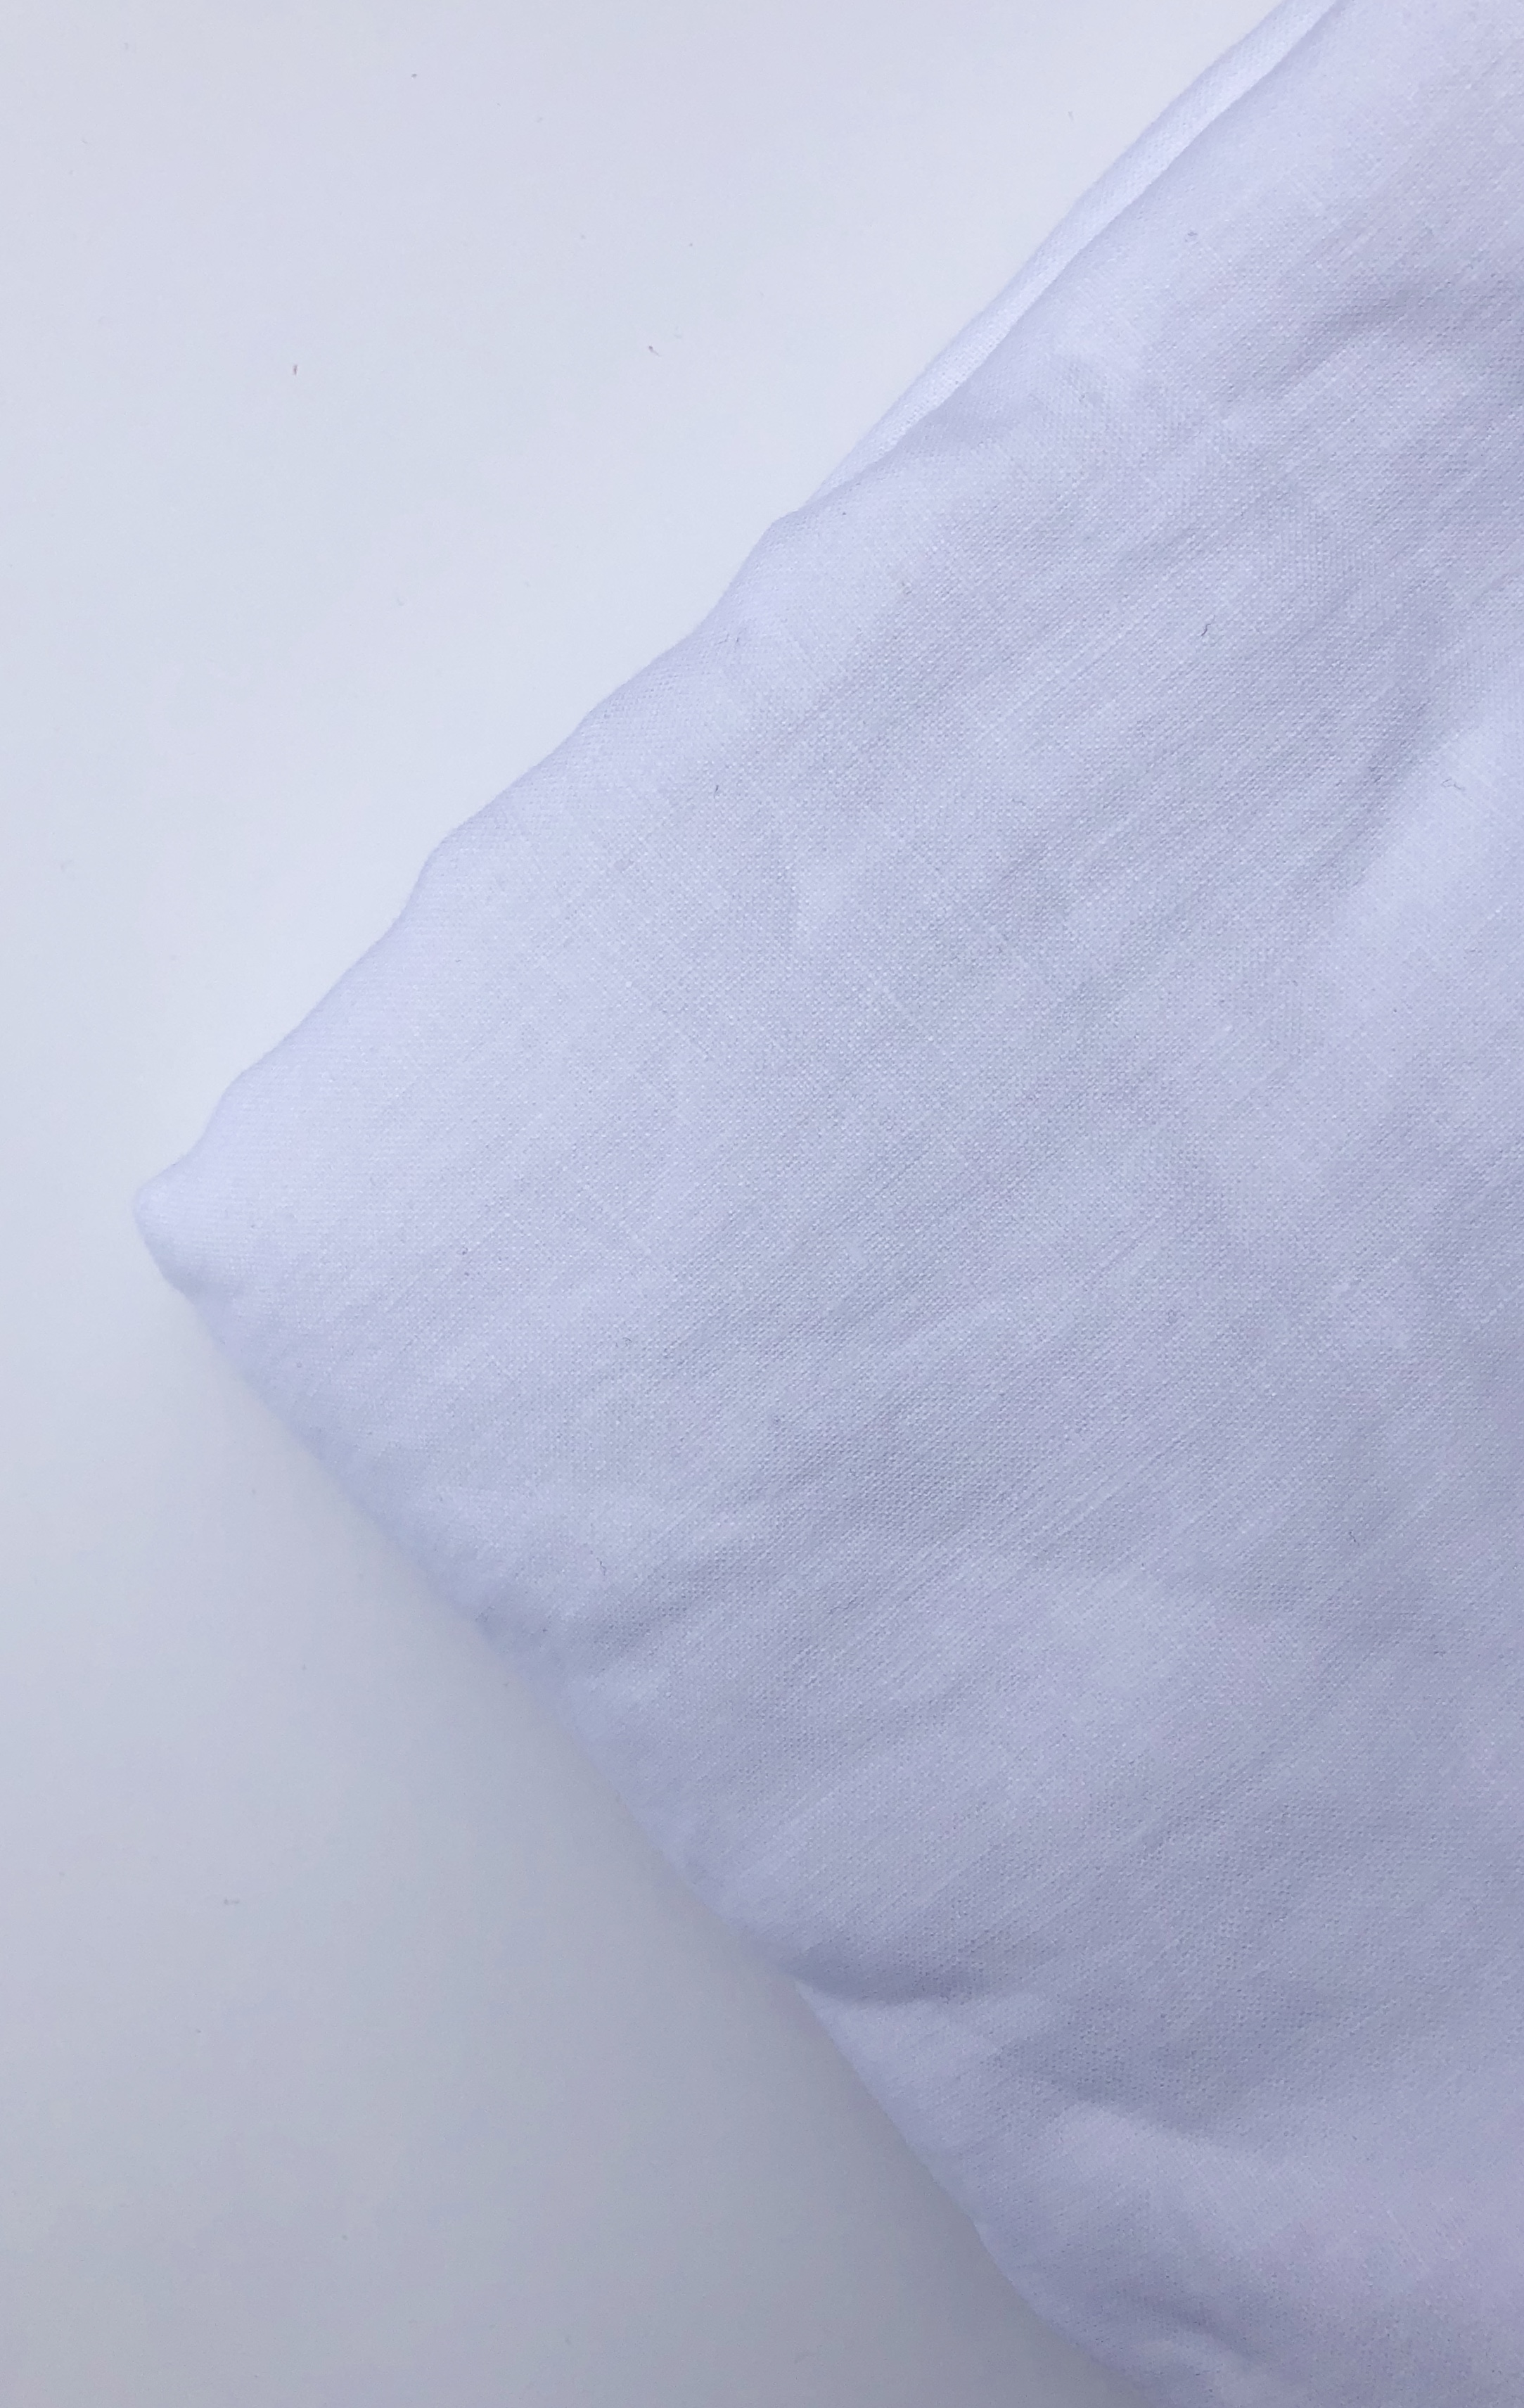 White Linen Trestle Cloth | Kiera Blanden Events + Styling